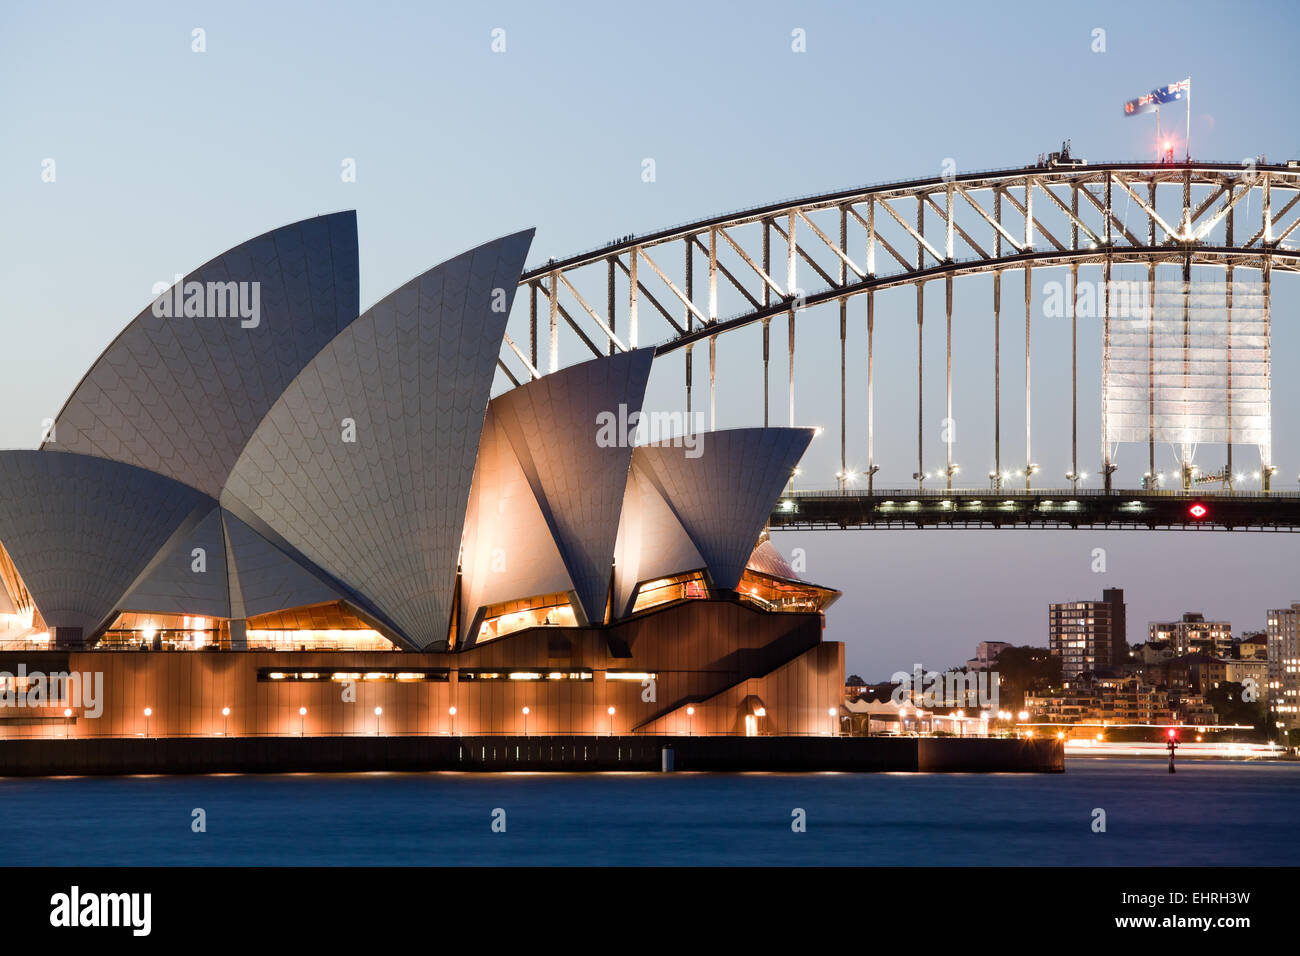 SYDNEY - FEBRUARY 6: The Sydney Opera House with Harbor bridge in Sydney, Australia on February 6, 2013. Stock Photo